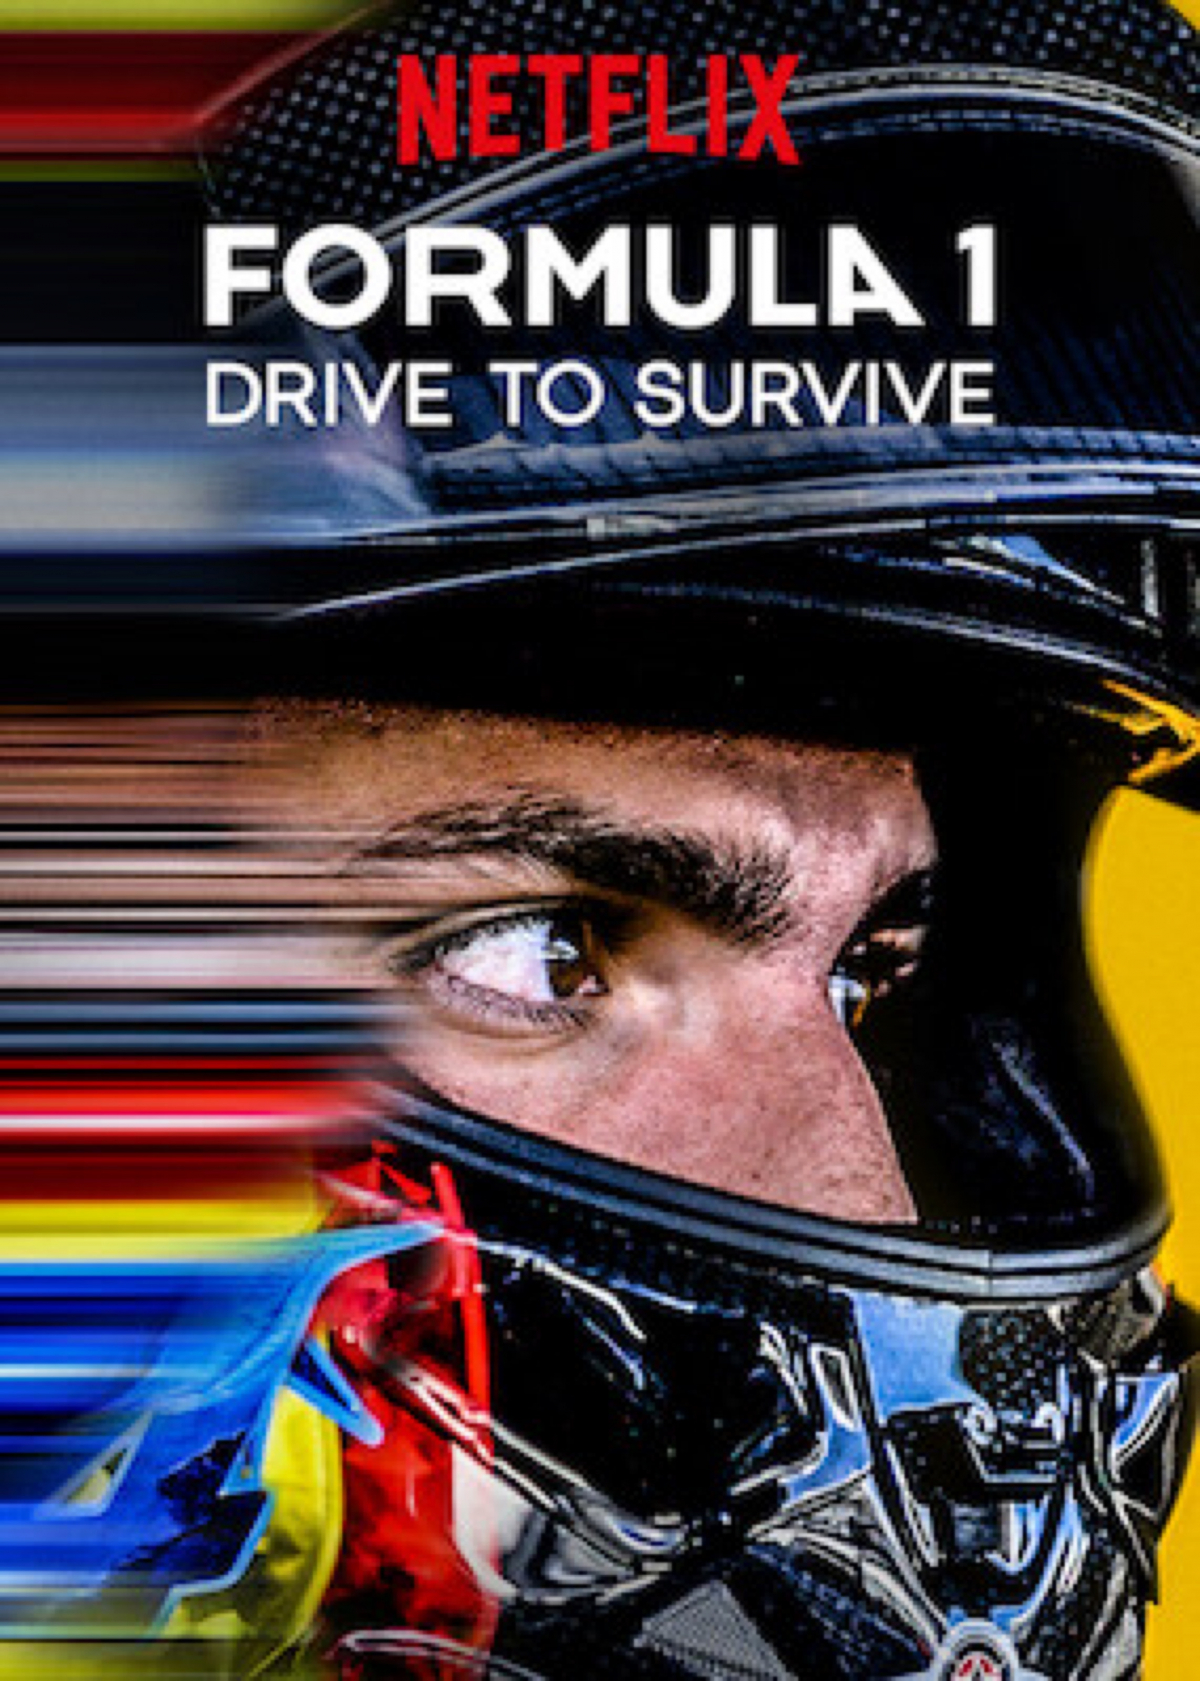 Formula 1: Drive To Survive Season 1 Episode 8 "The next generation”